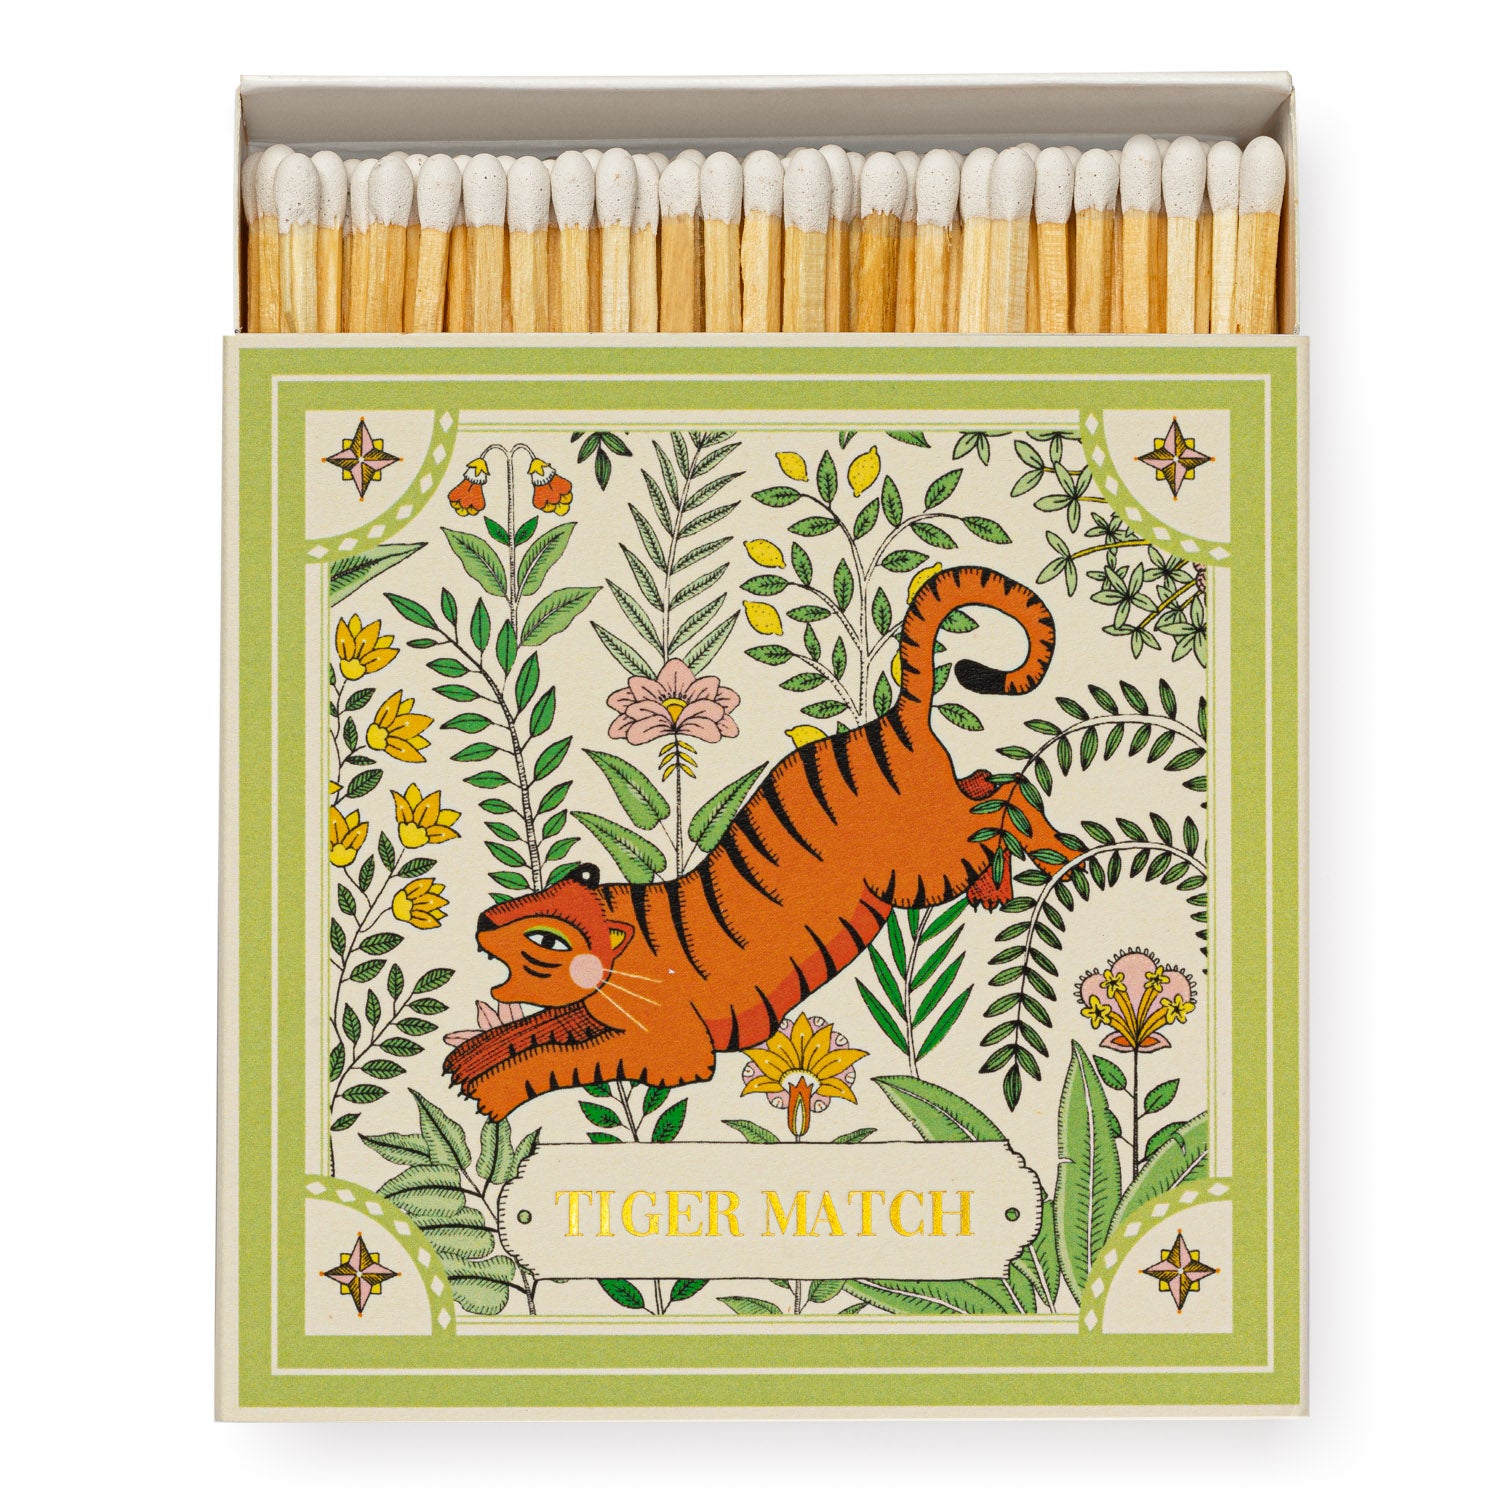 Ariane's Green Tiger Luxury Matches – 100 Stick Matches